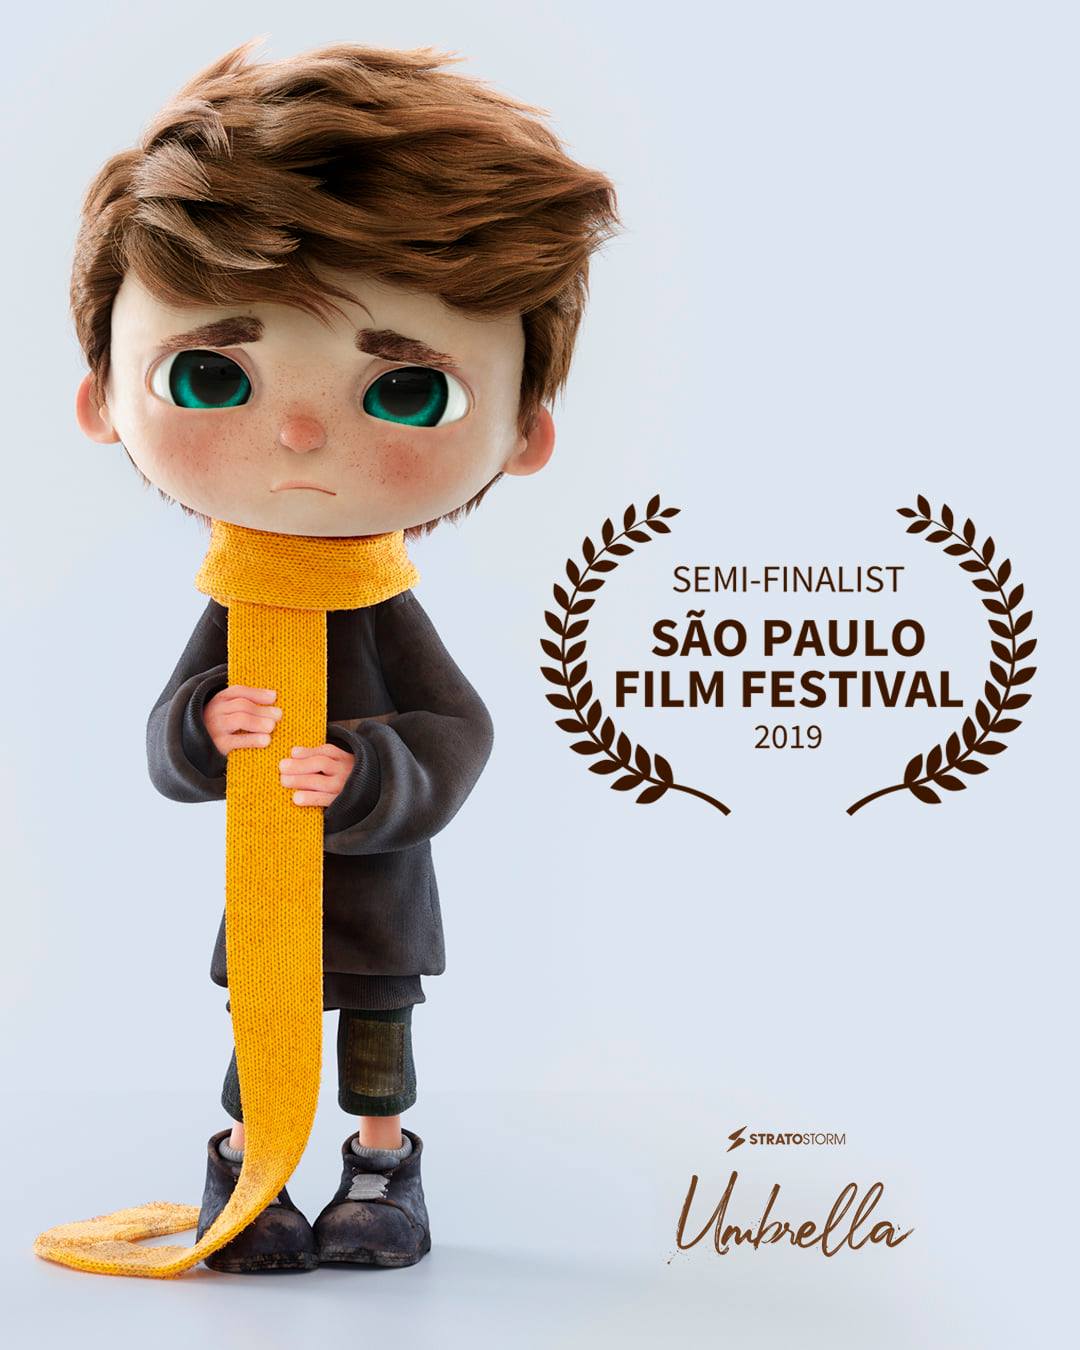 Semi-finalist at São Paulo Film Festival